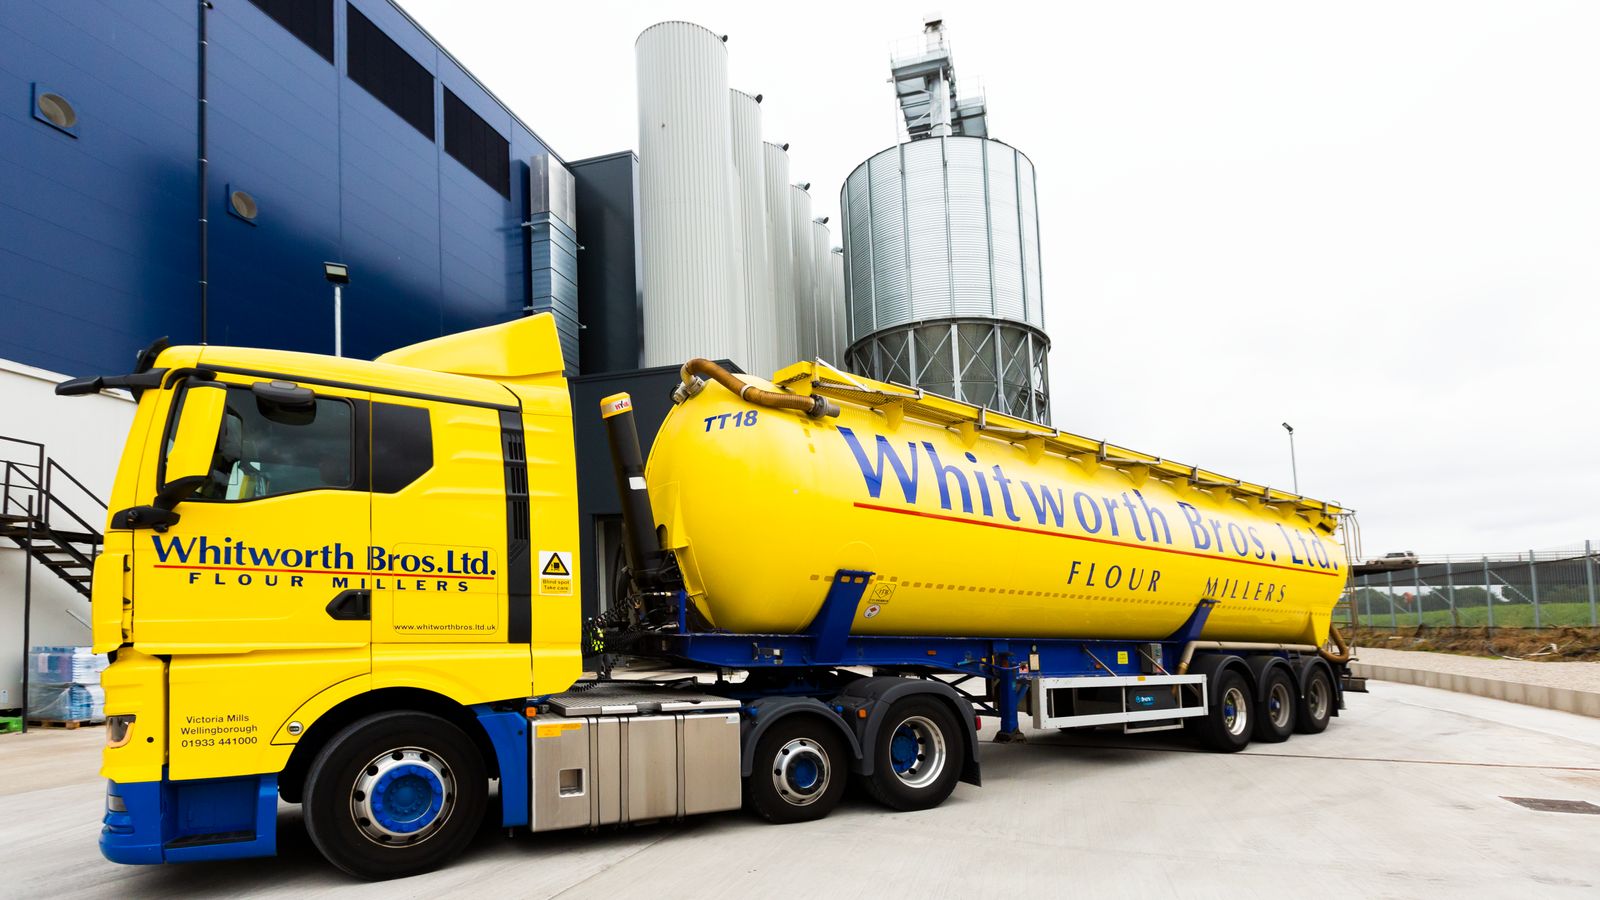 Whitworth Bros' yellow bulk tanker.